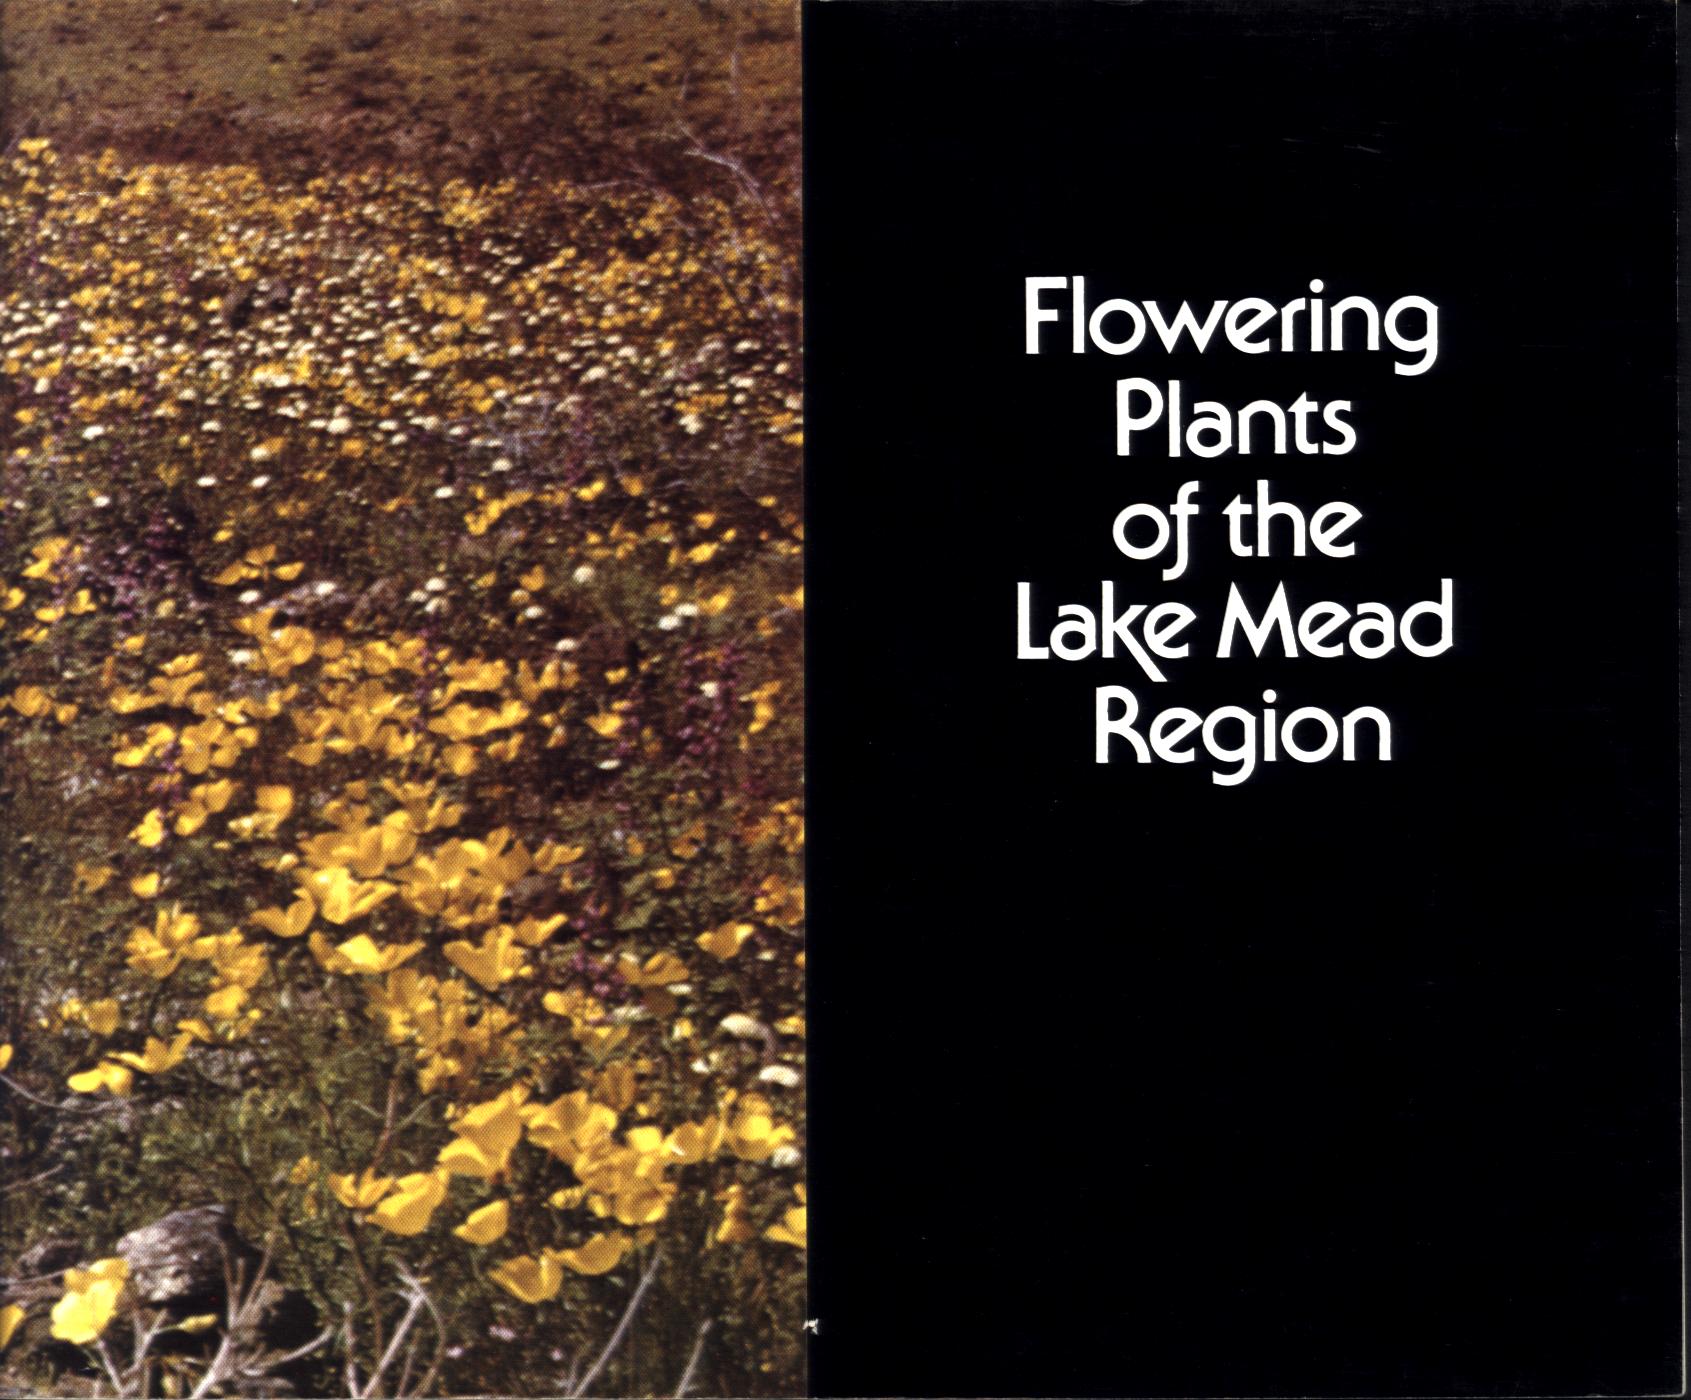 FLOWERING PLANTS OF THE LAKE MEAD REGION